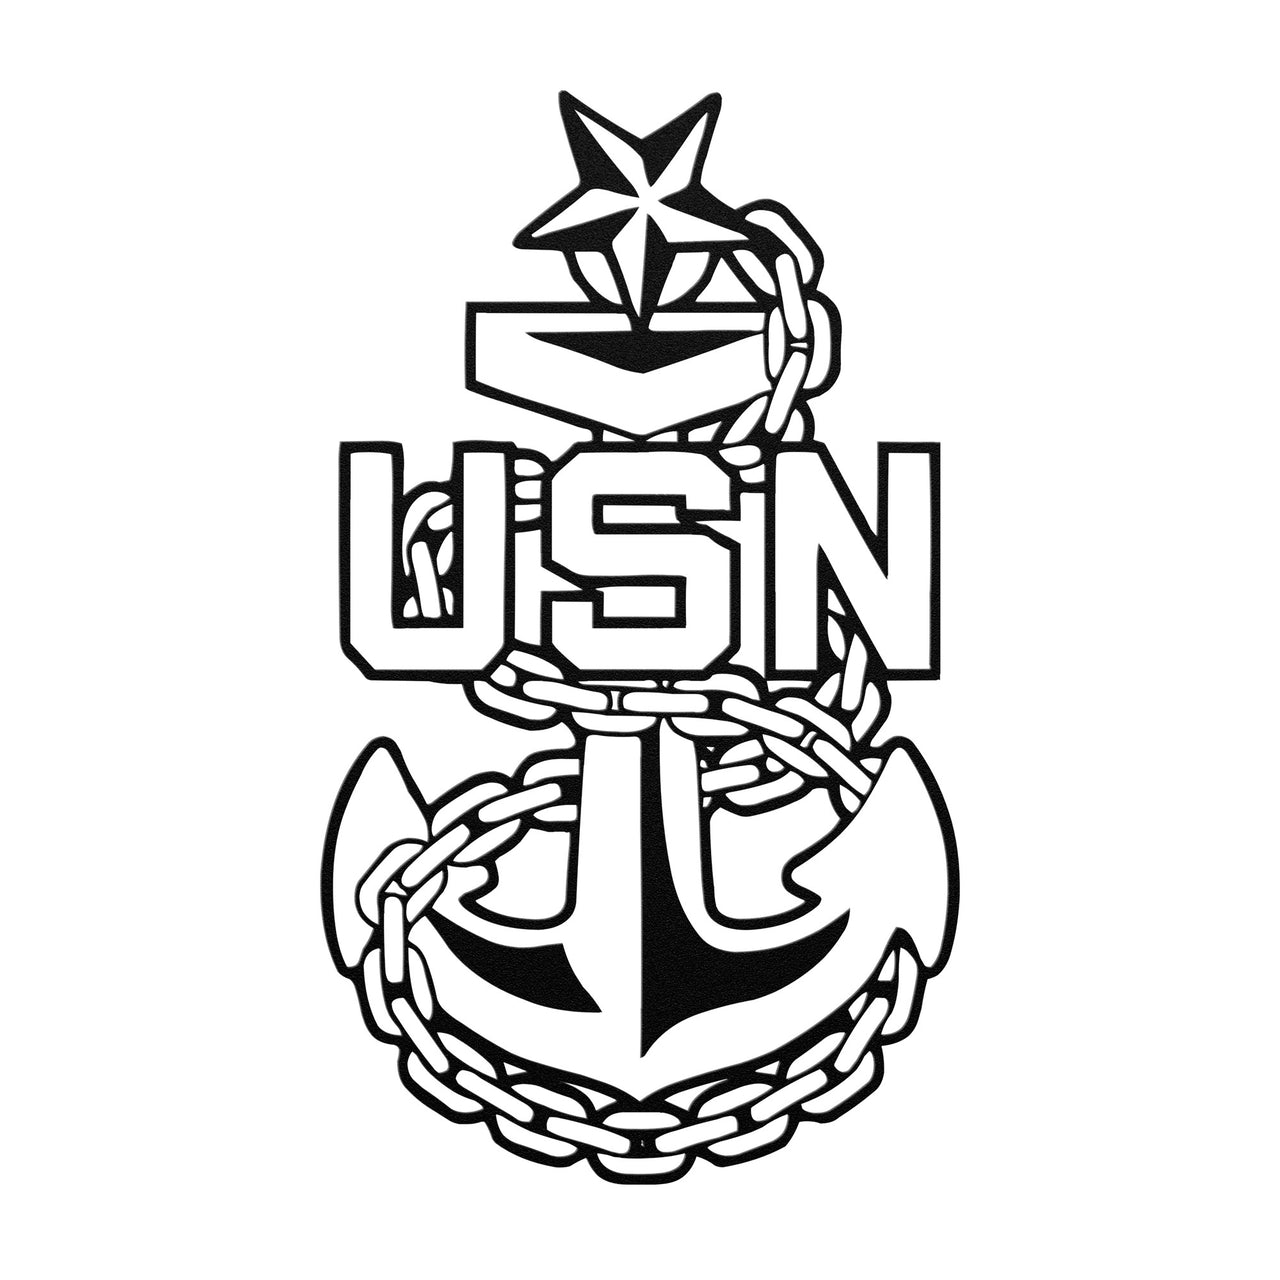 U.S. Navy Senior Chief Wall Art